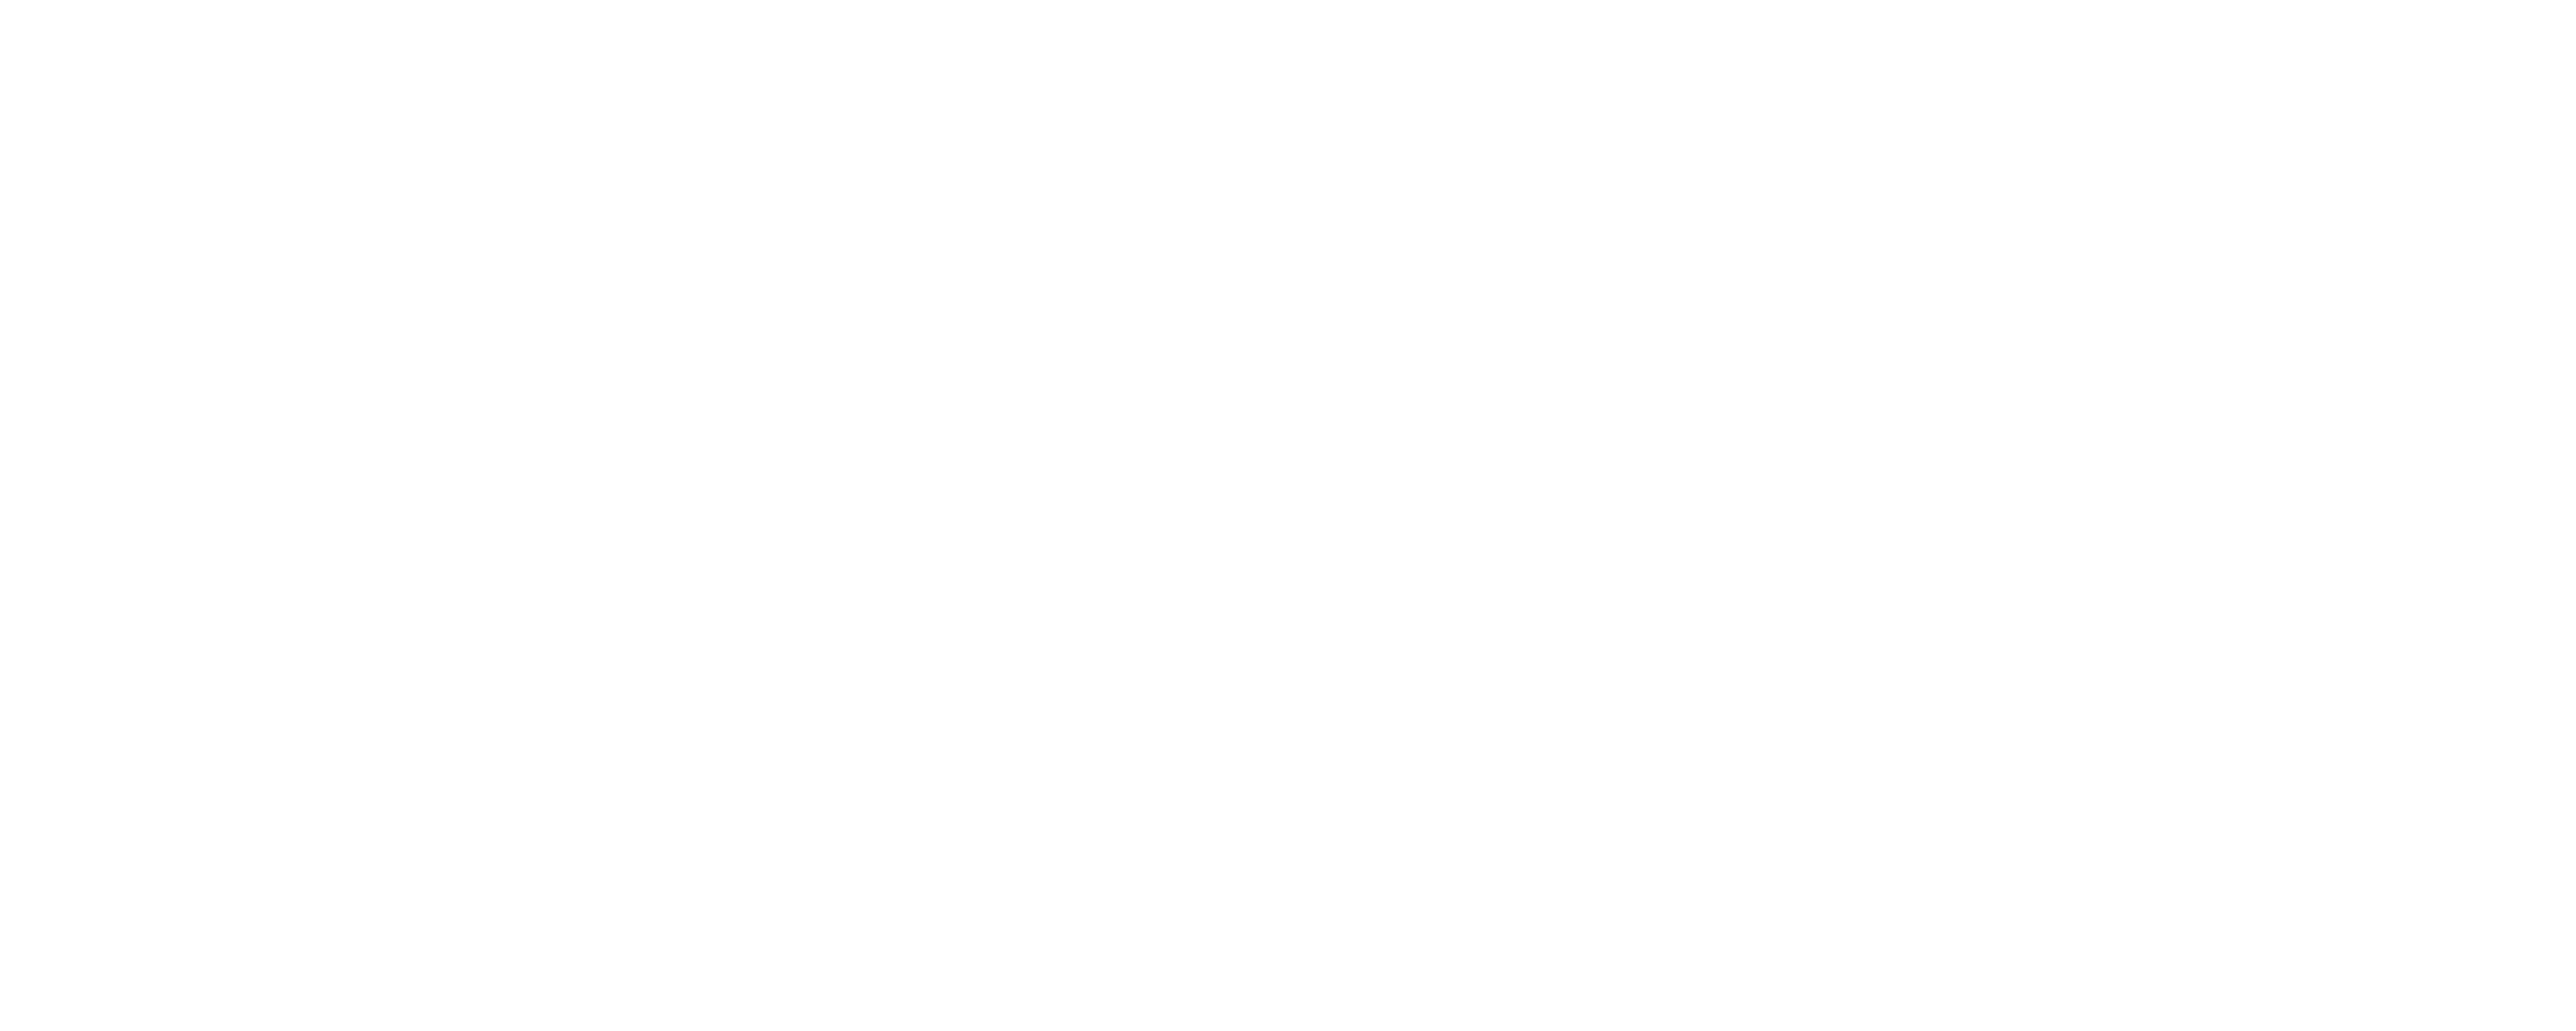 AAVA Lapland – Joogastudio & Cafe Logo